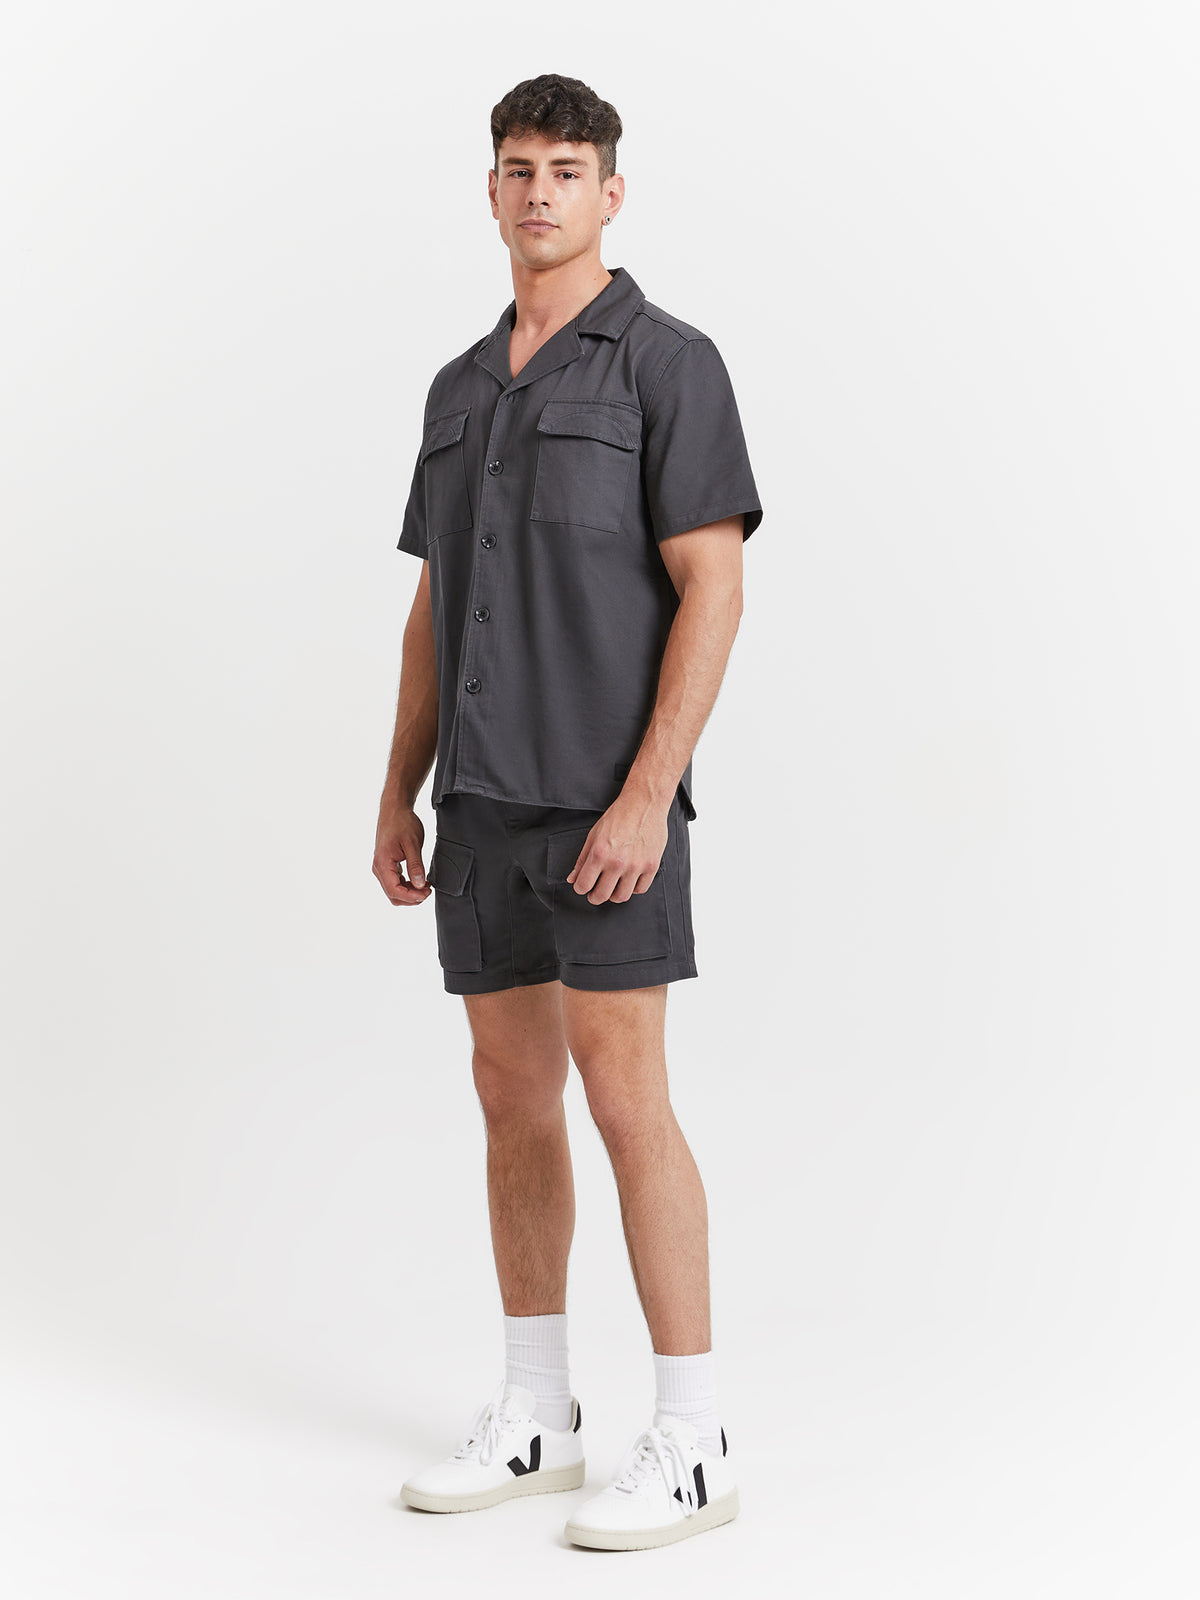 Coast Cargo Shorts in Slate Grey